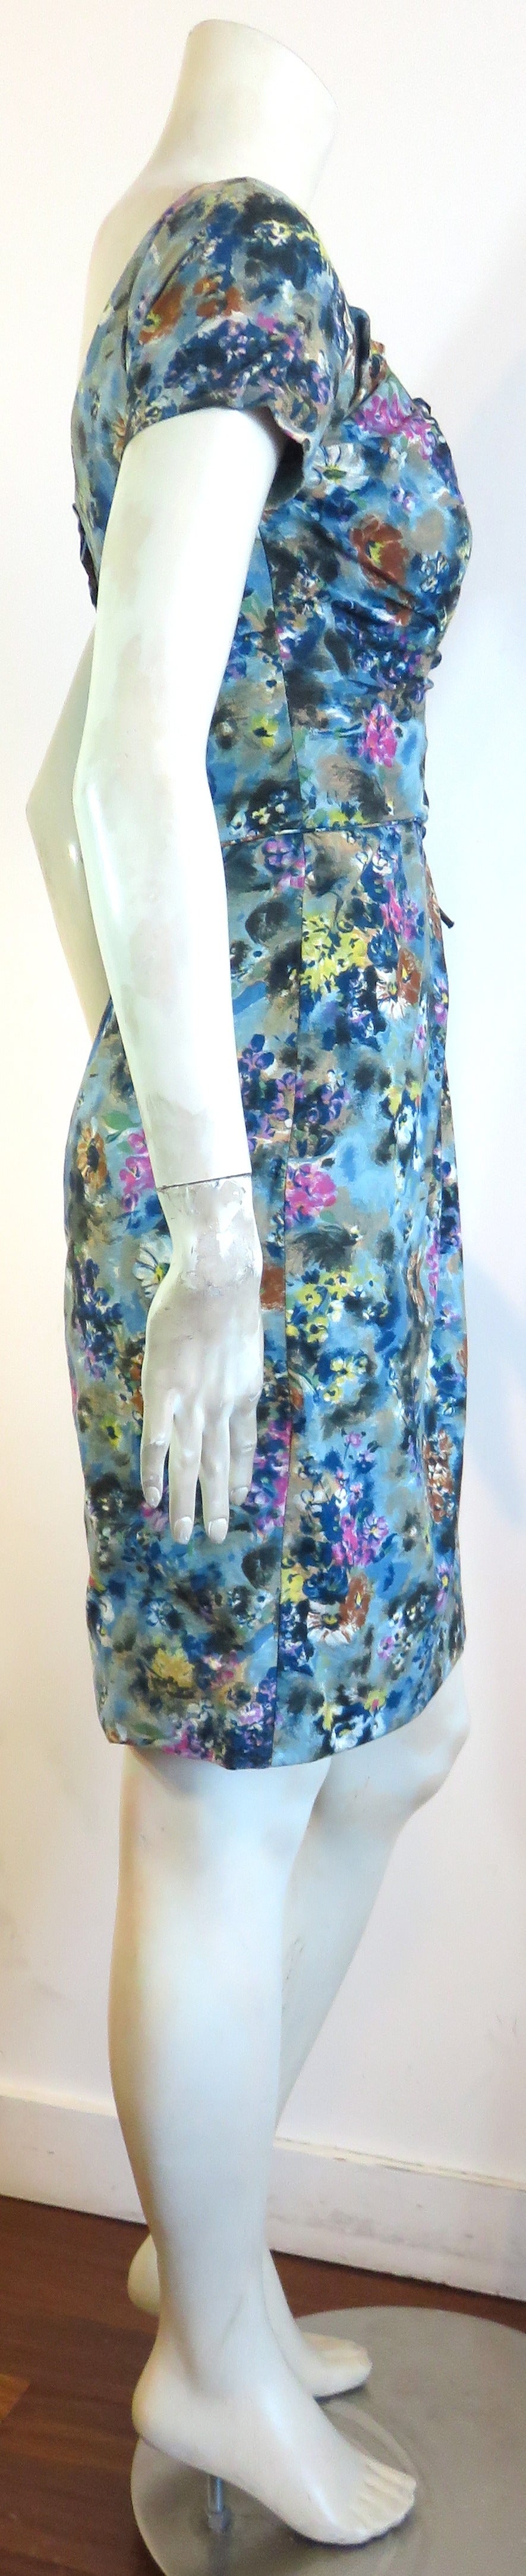 1950's CEIL CHAPMAN Floral printed dress For Sale 1